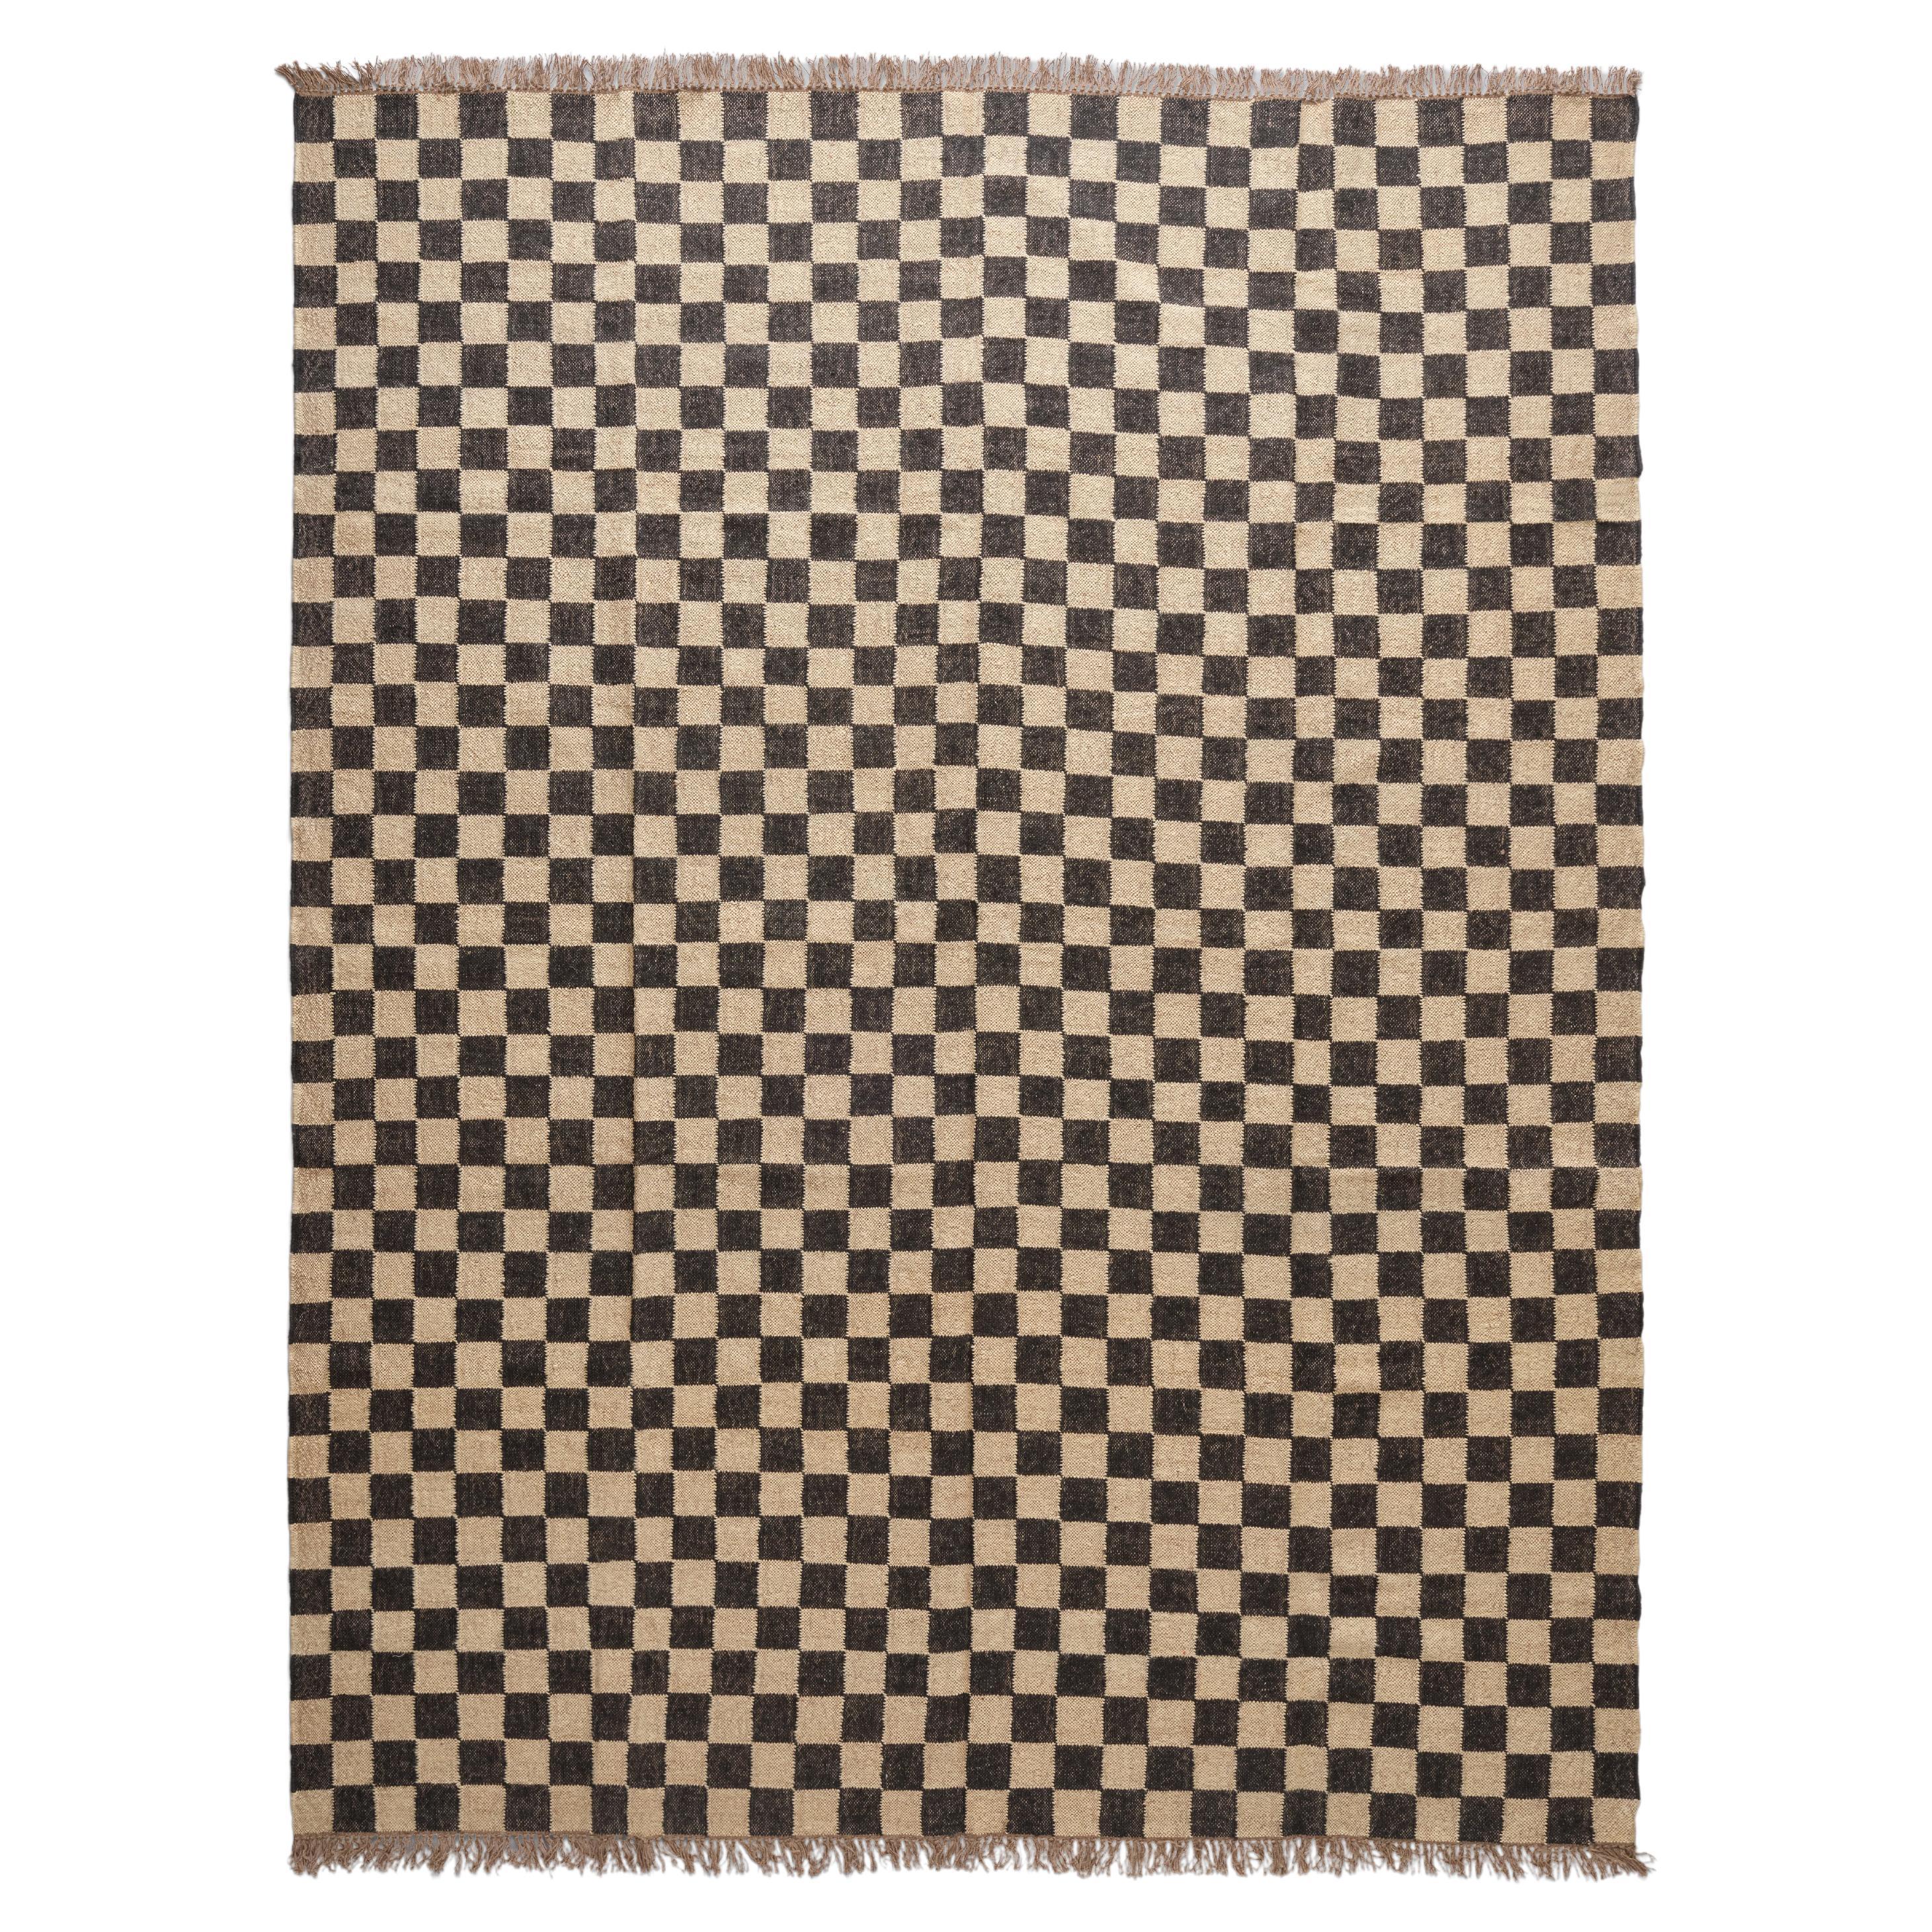 The Forsyth Checkerboard Rug - Off Black, 6x9